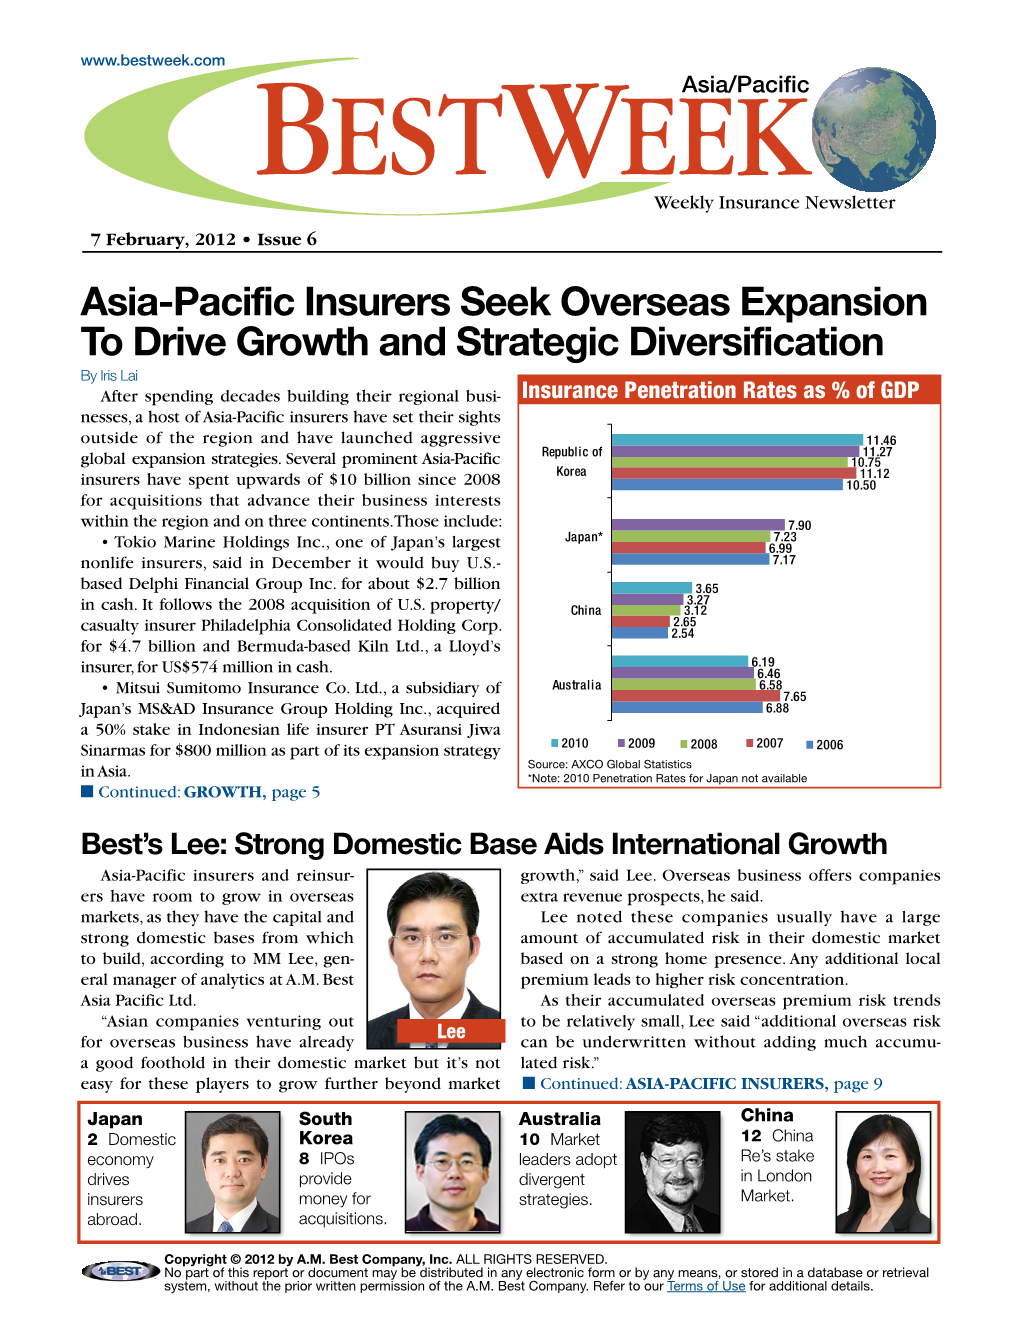 Bestweek Asia/Pacific, February 7, 2012